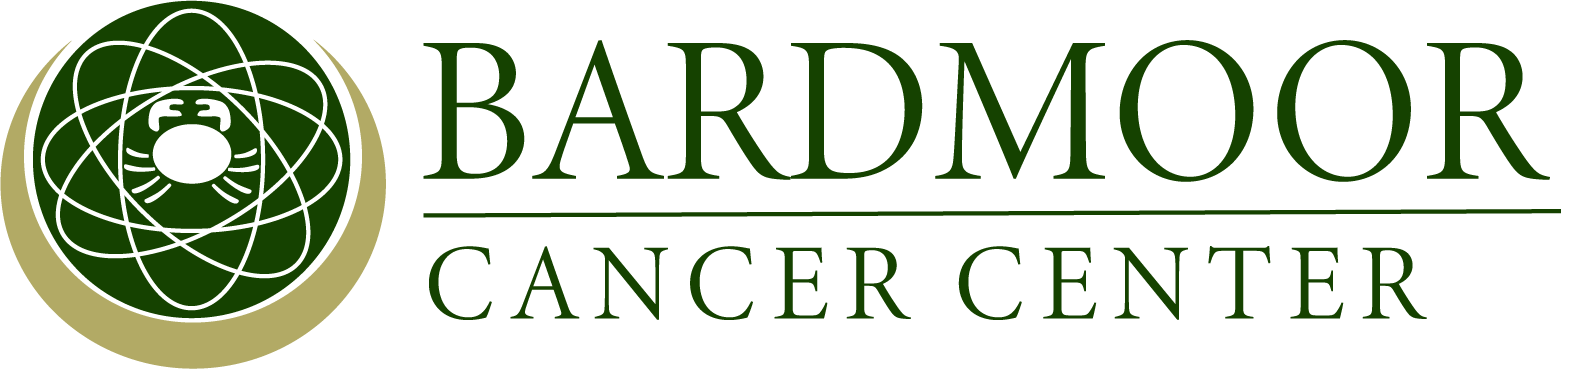 Bardmoor Cancer Center